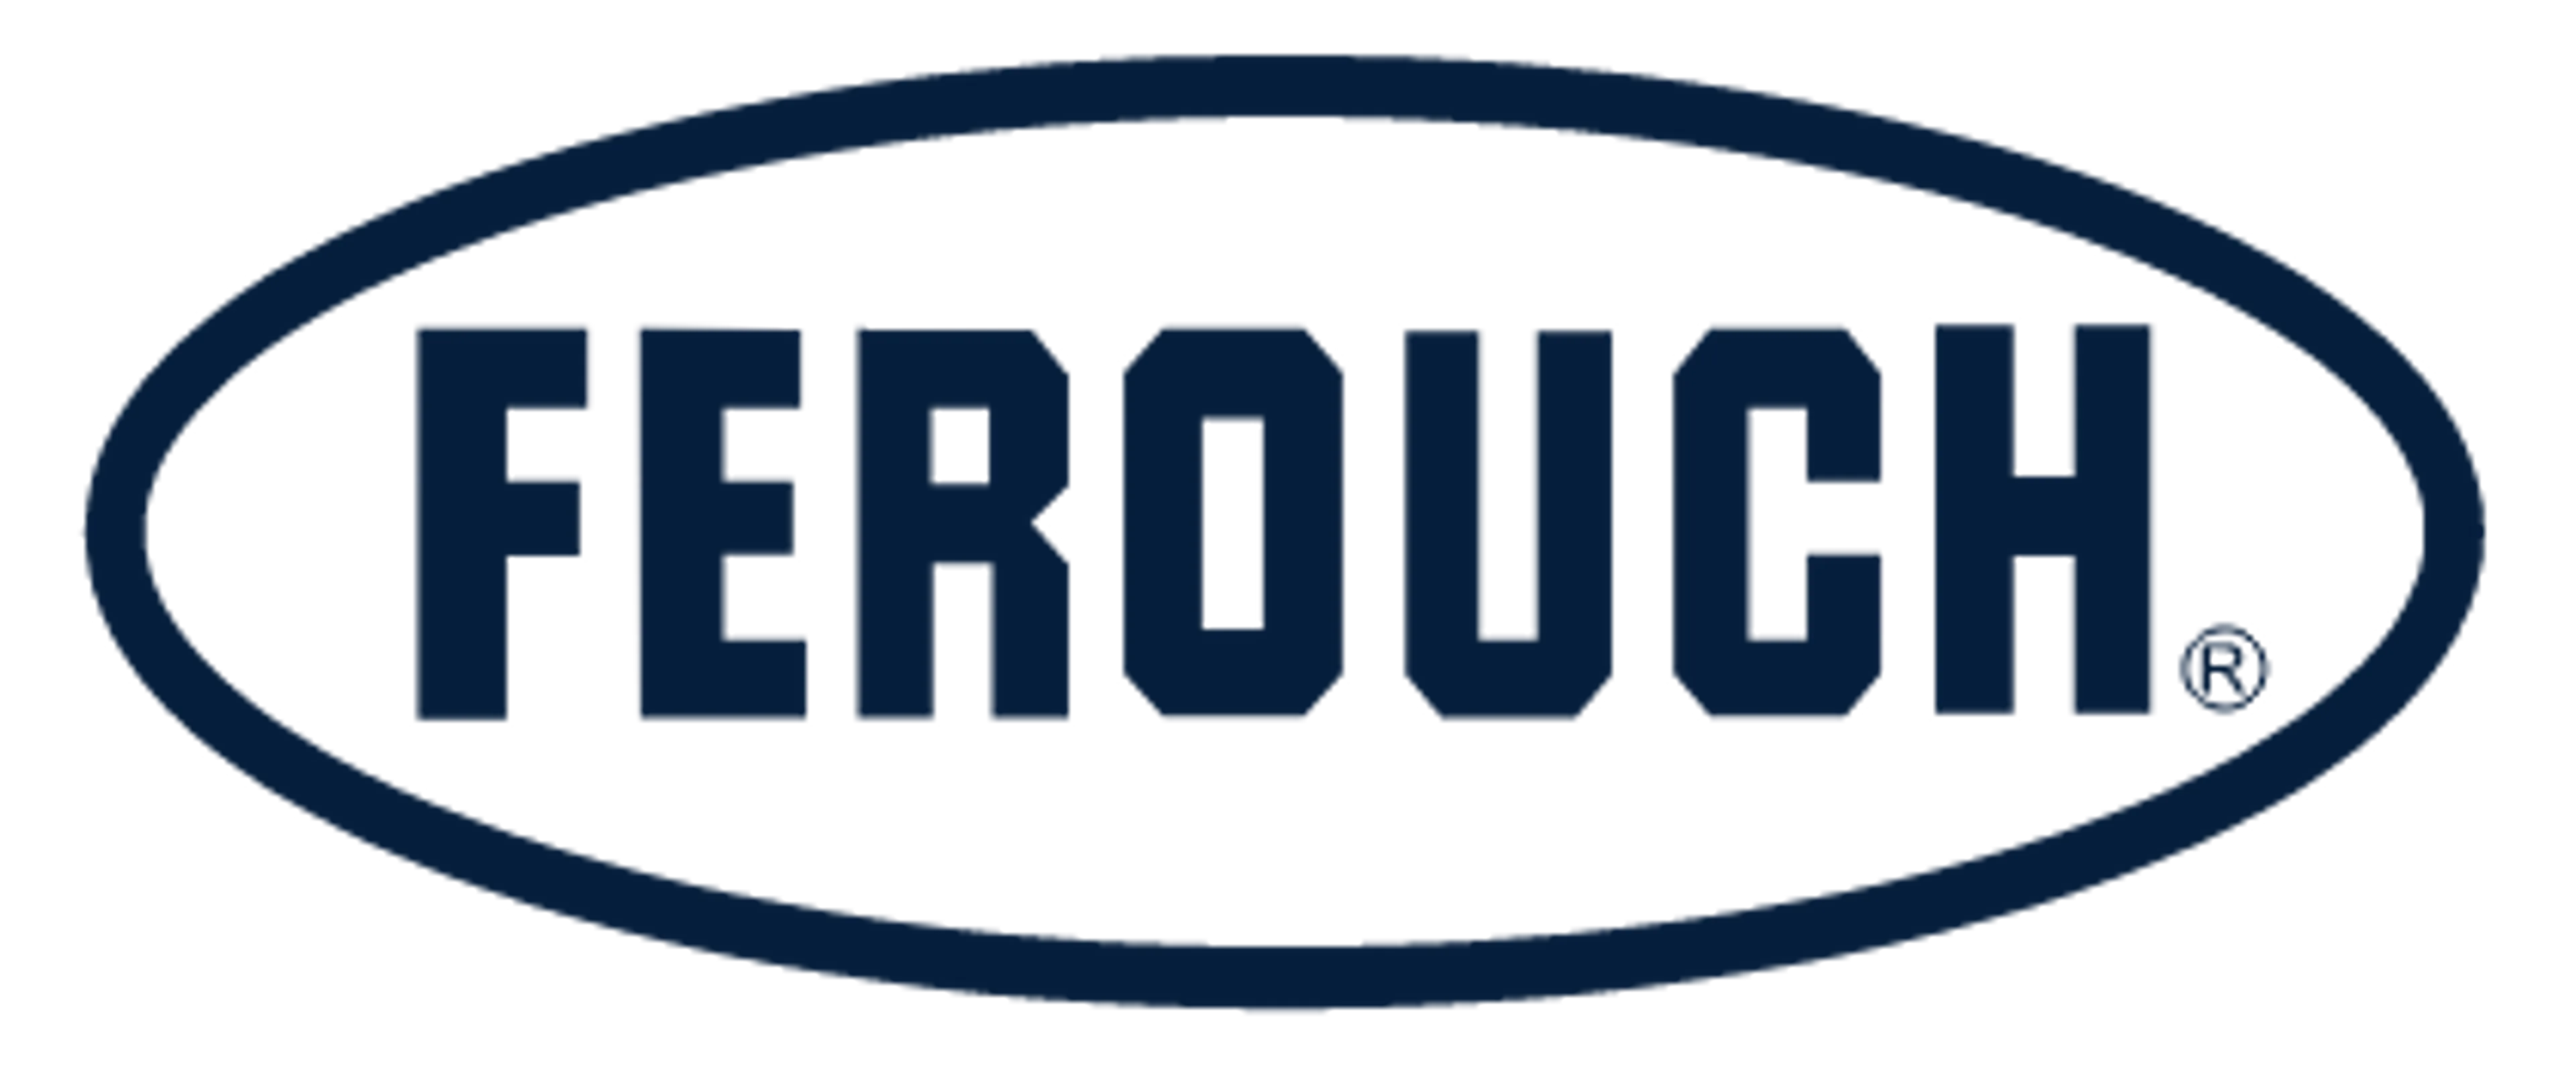 FEROUCH logo